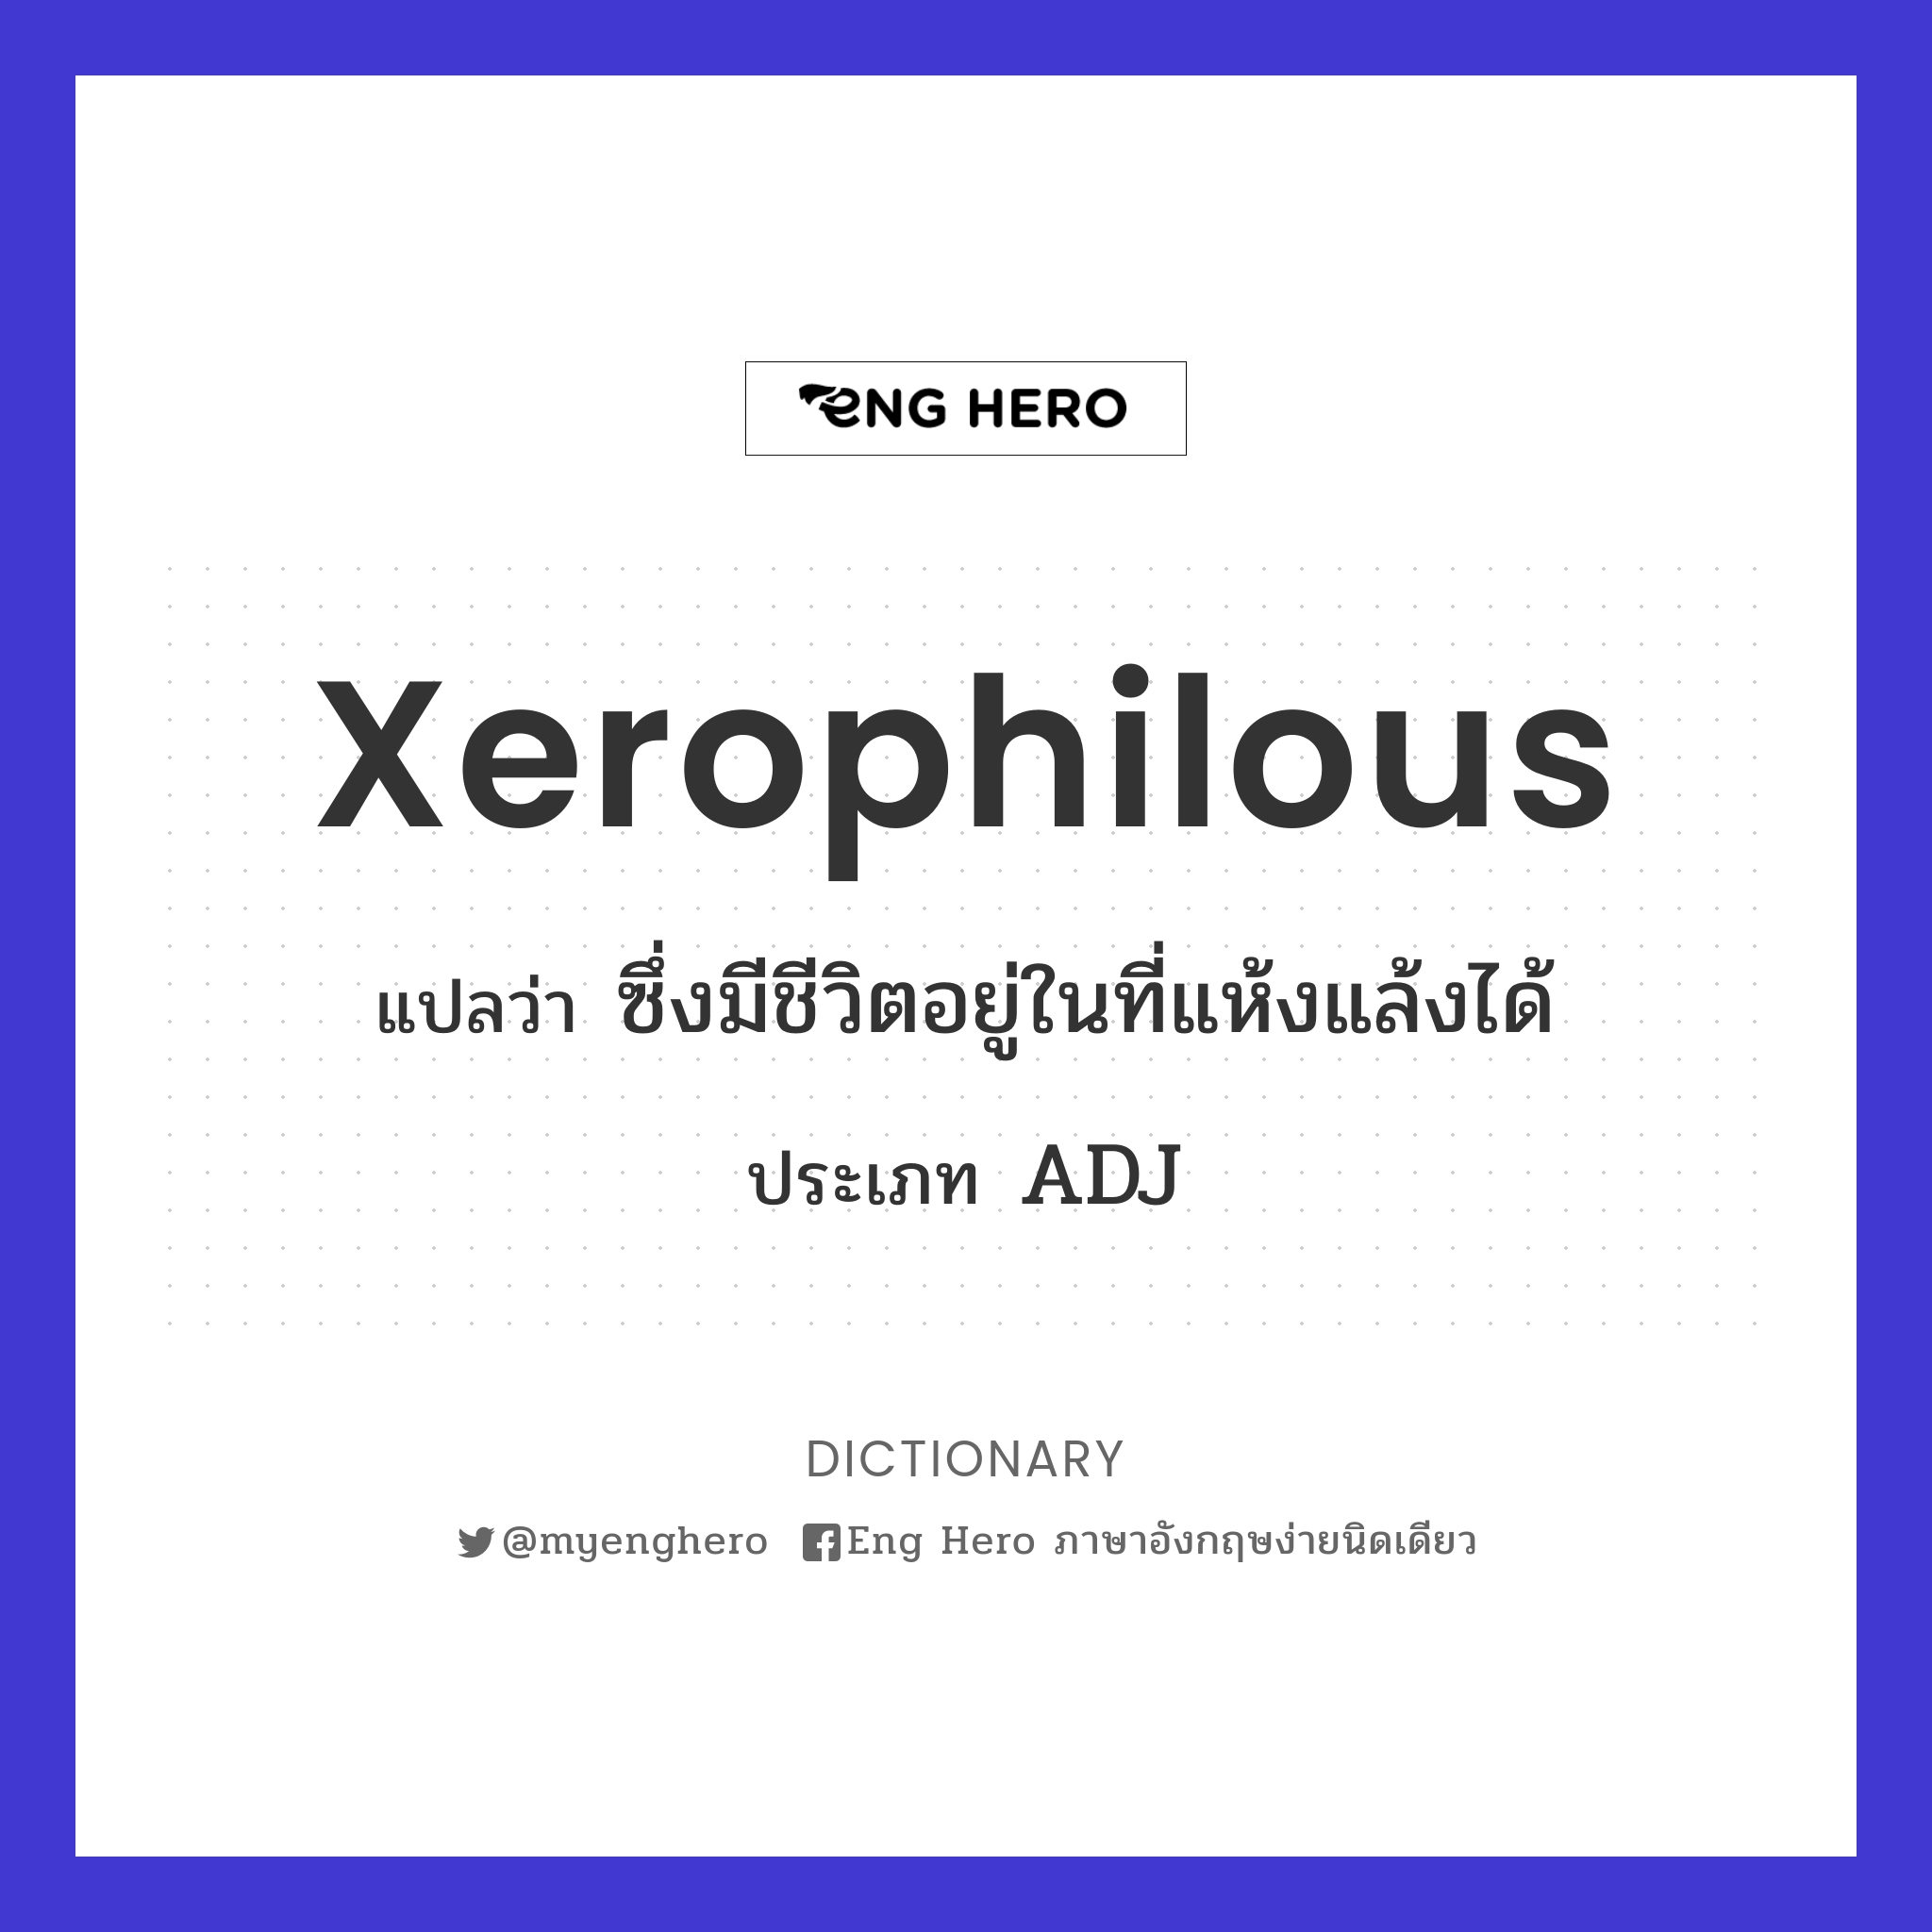 xerophilous